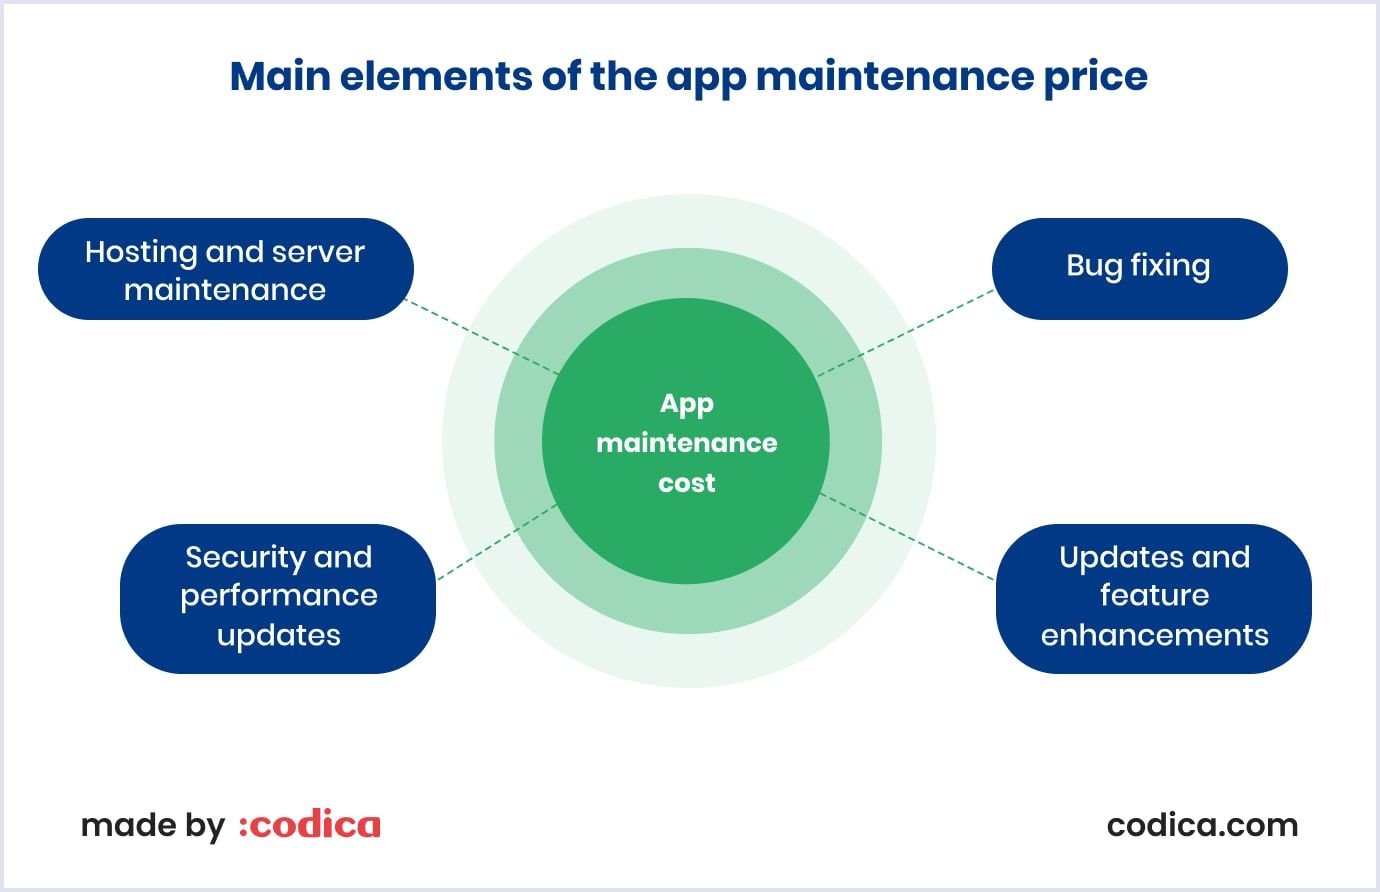 App maintenance cost